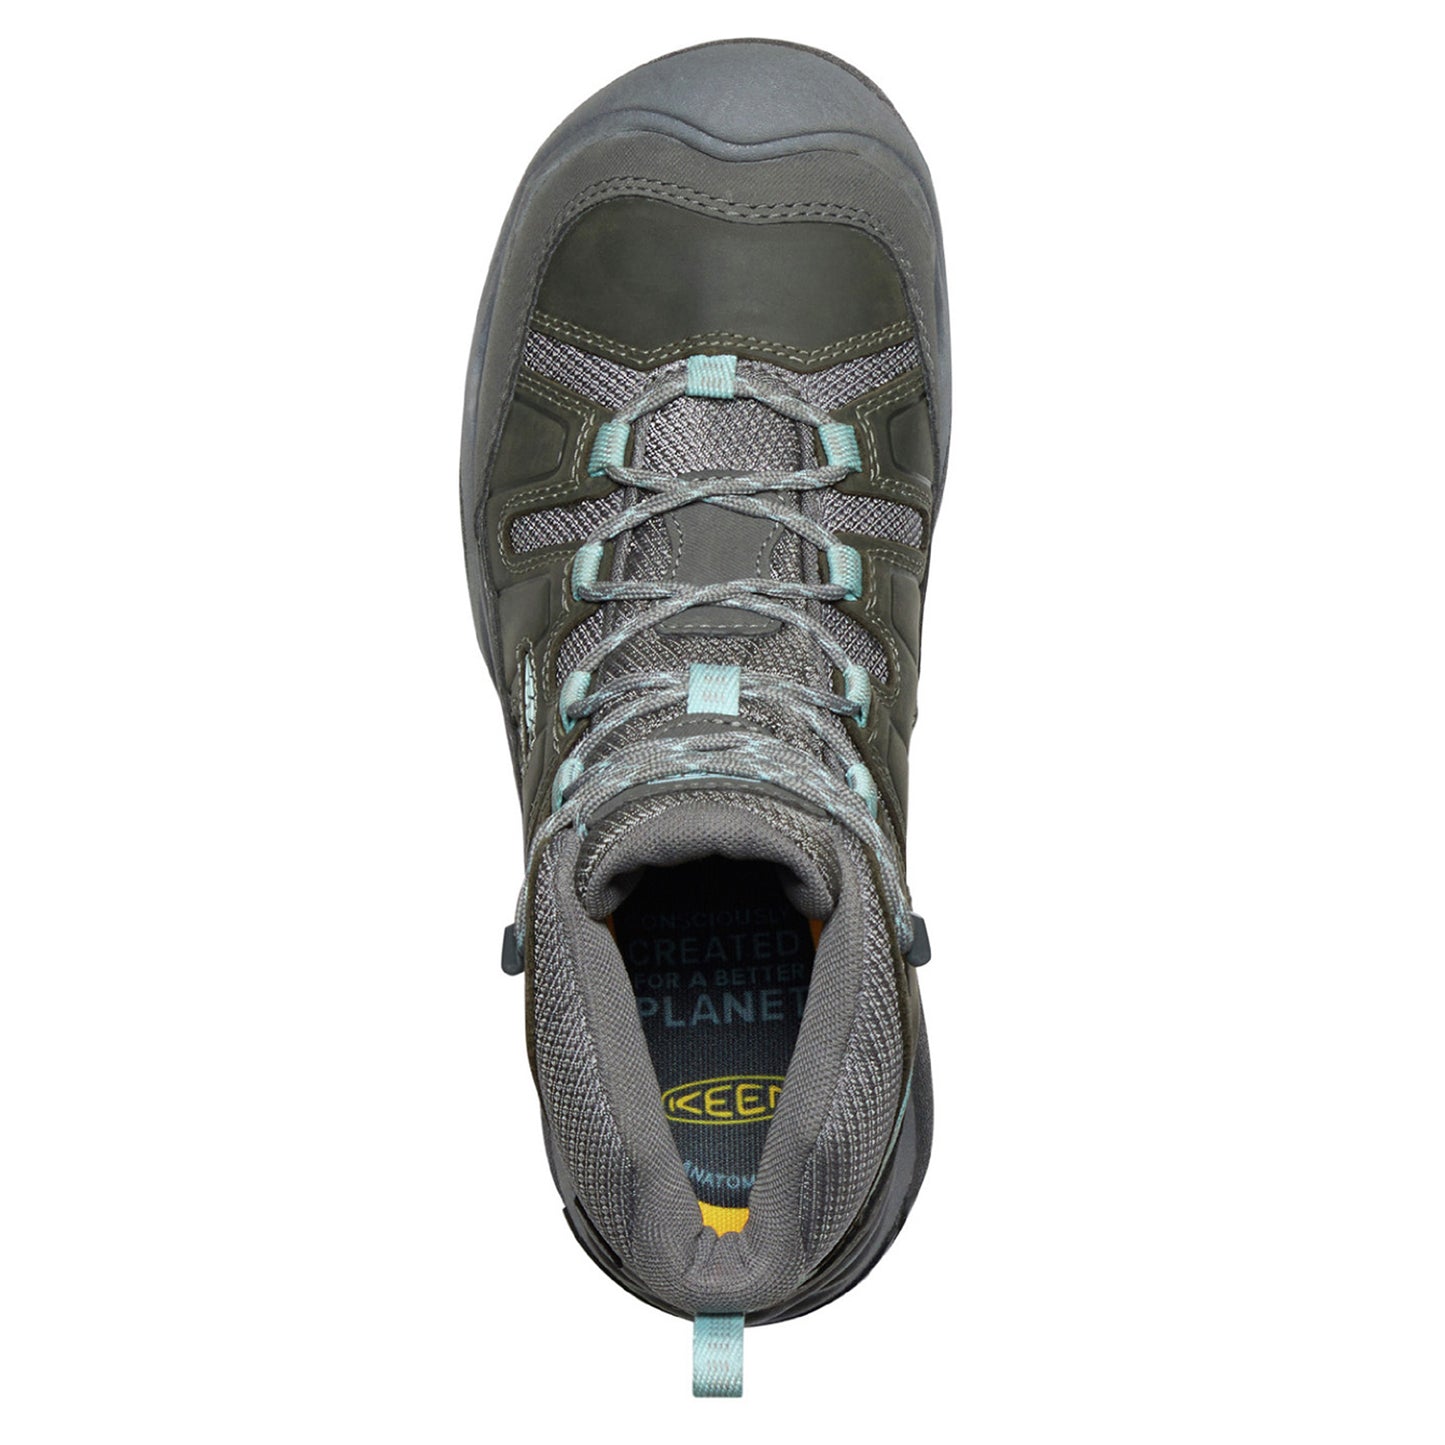 Peltz Shoes  Women's Keen Circadia Mid Waterproof Hiking Boot Steel Grey/Cloud Blue 1026763